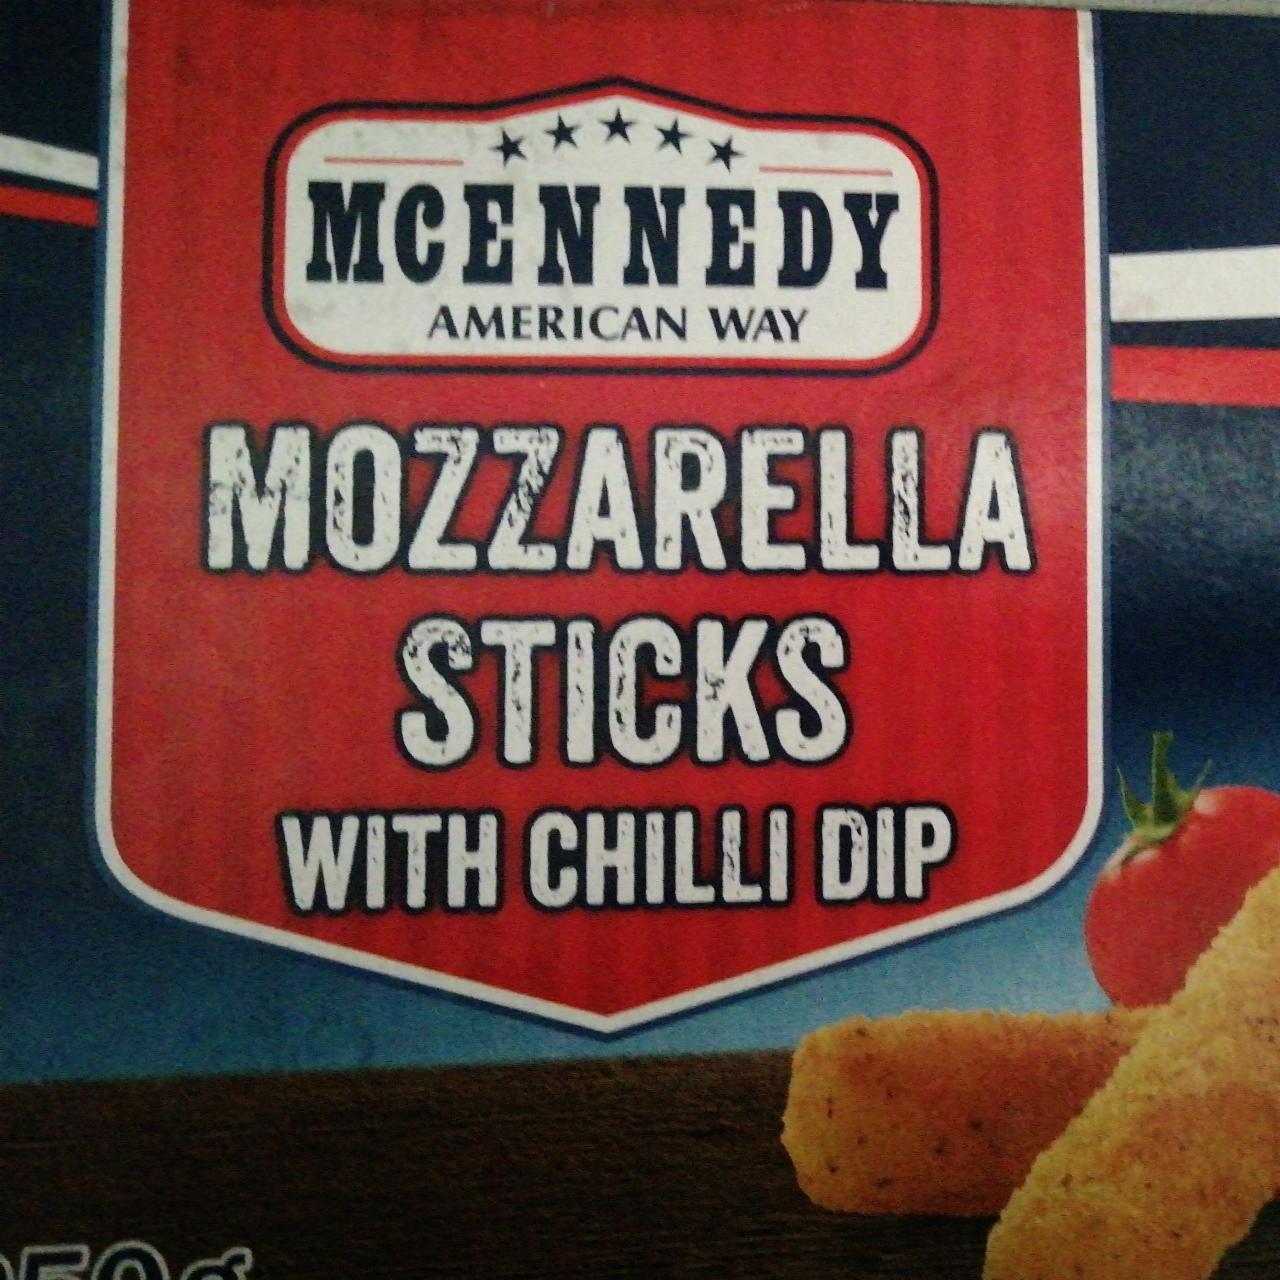 Fotografie - Mozarella Sticks with Chilli dip McEnnedy American Way